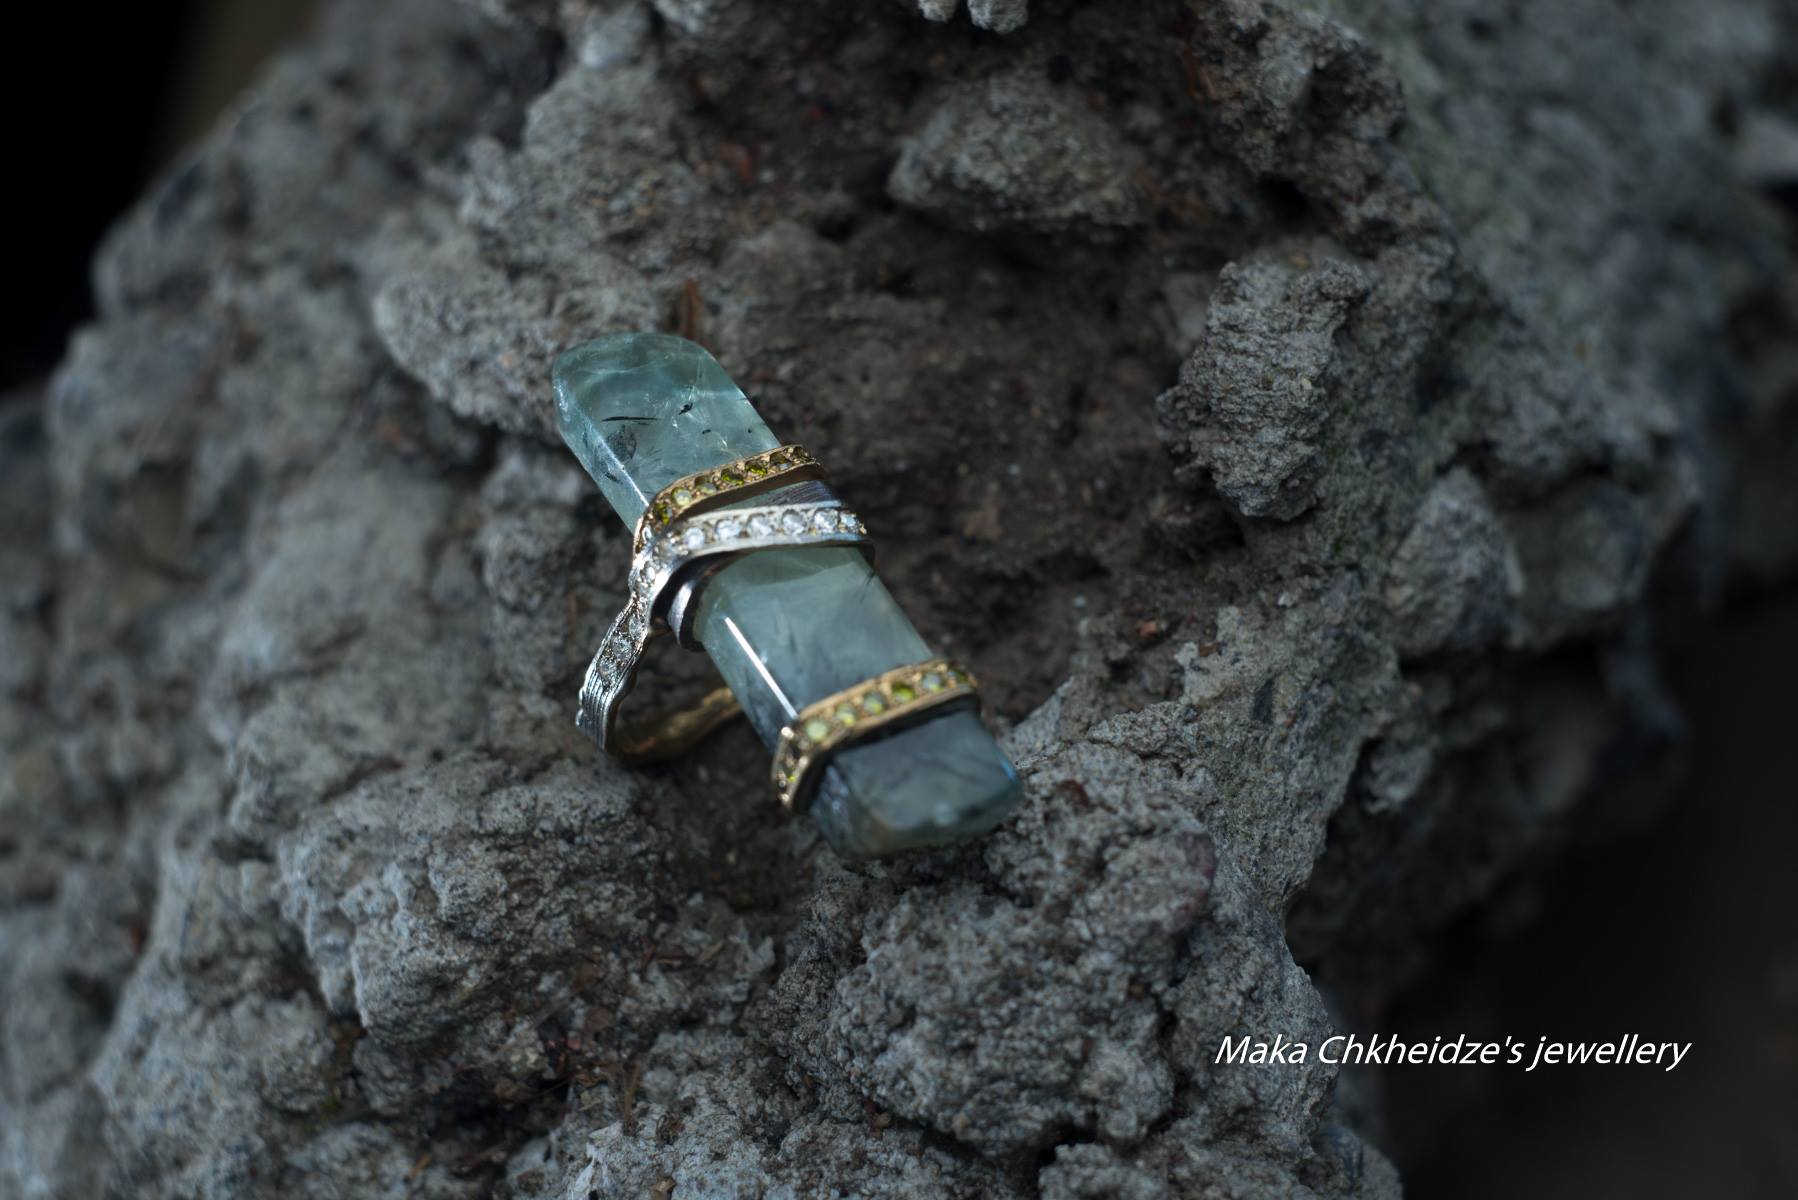 Jewellery by MaKa - სამკაული რომელსაც ასაკი არ აქვს